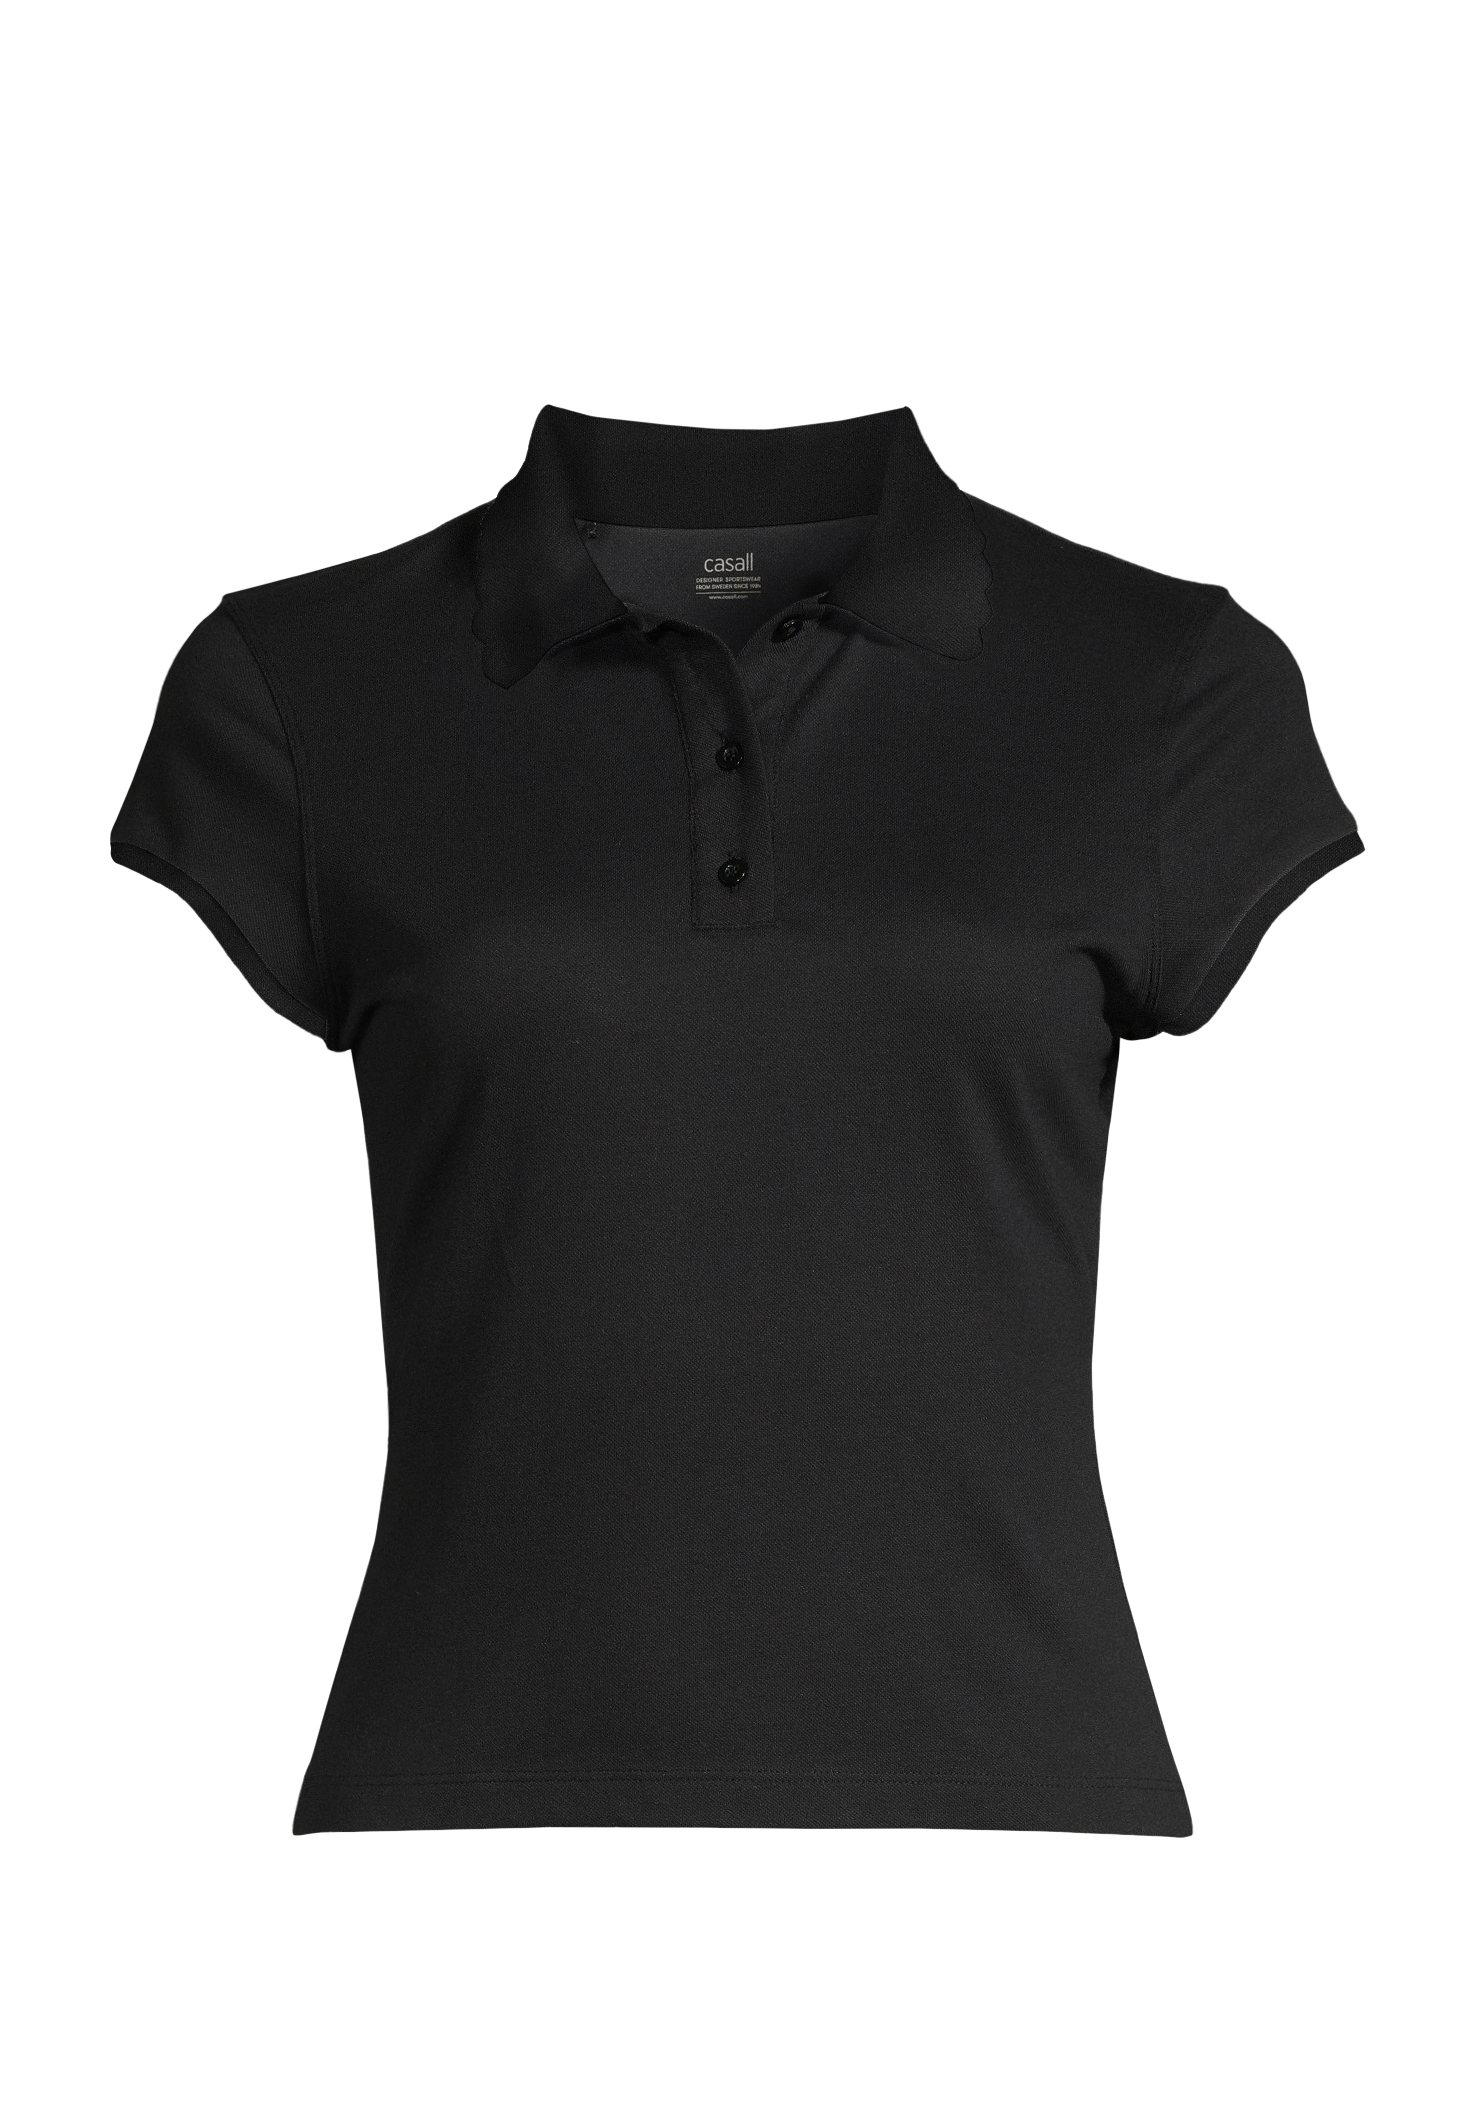 Court Polo Shirt - Black